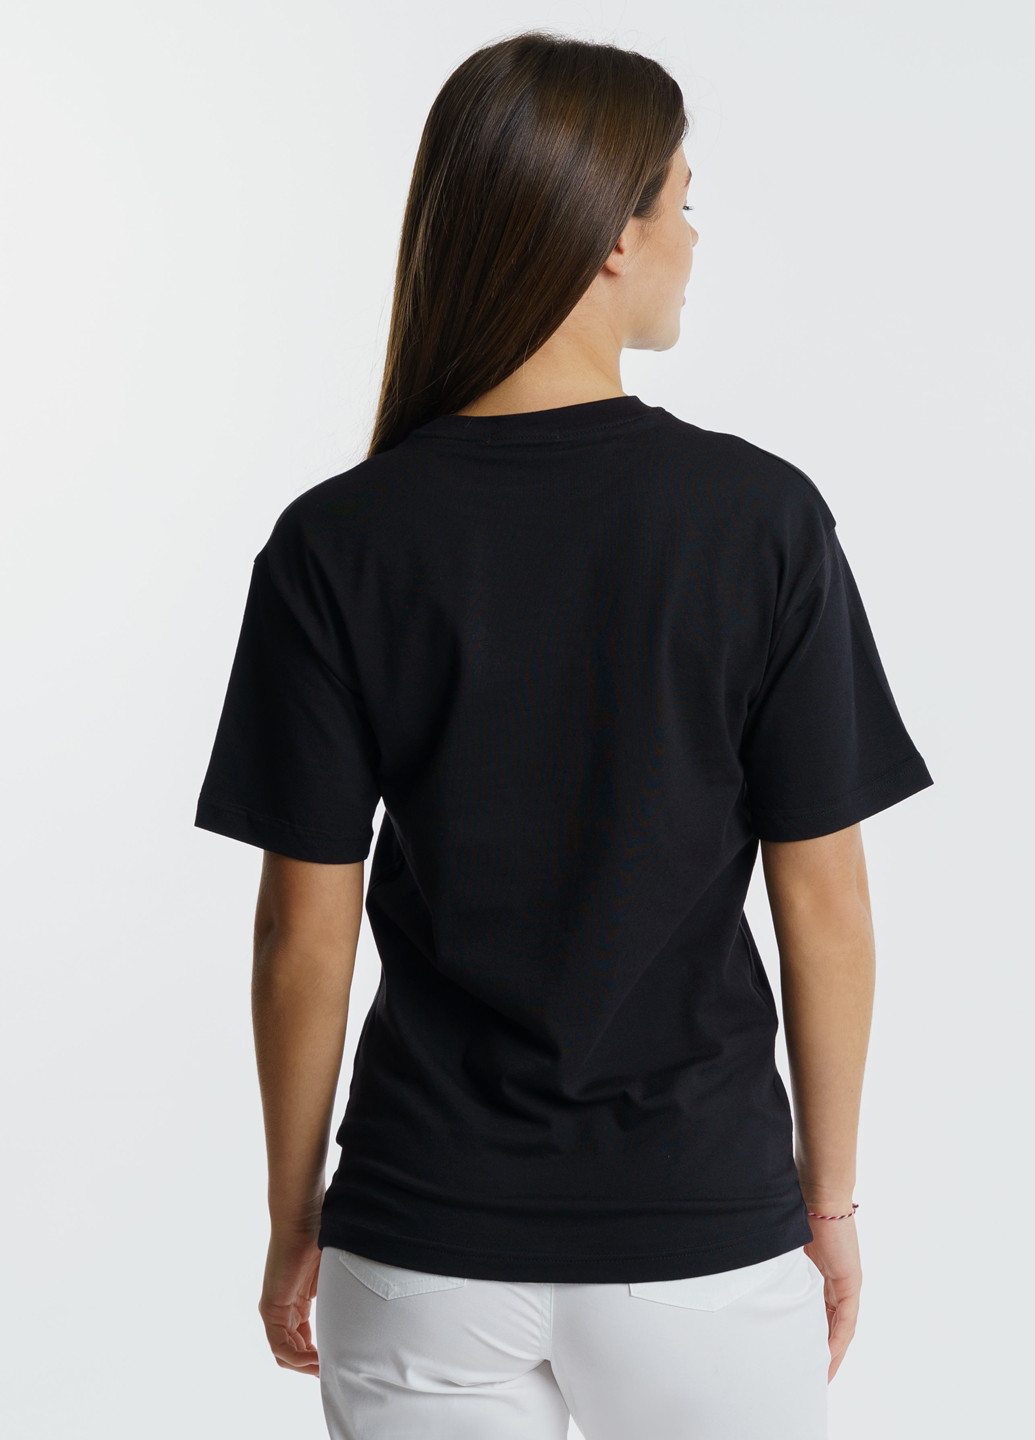 Черная летняя футболка женская Arber T-shirt W Overs